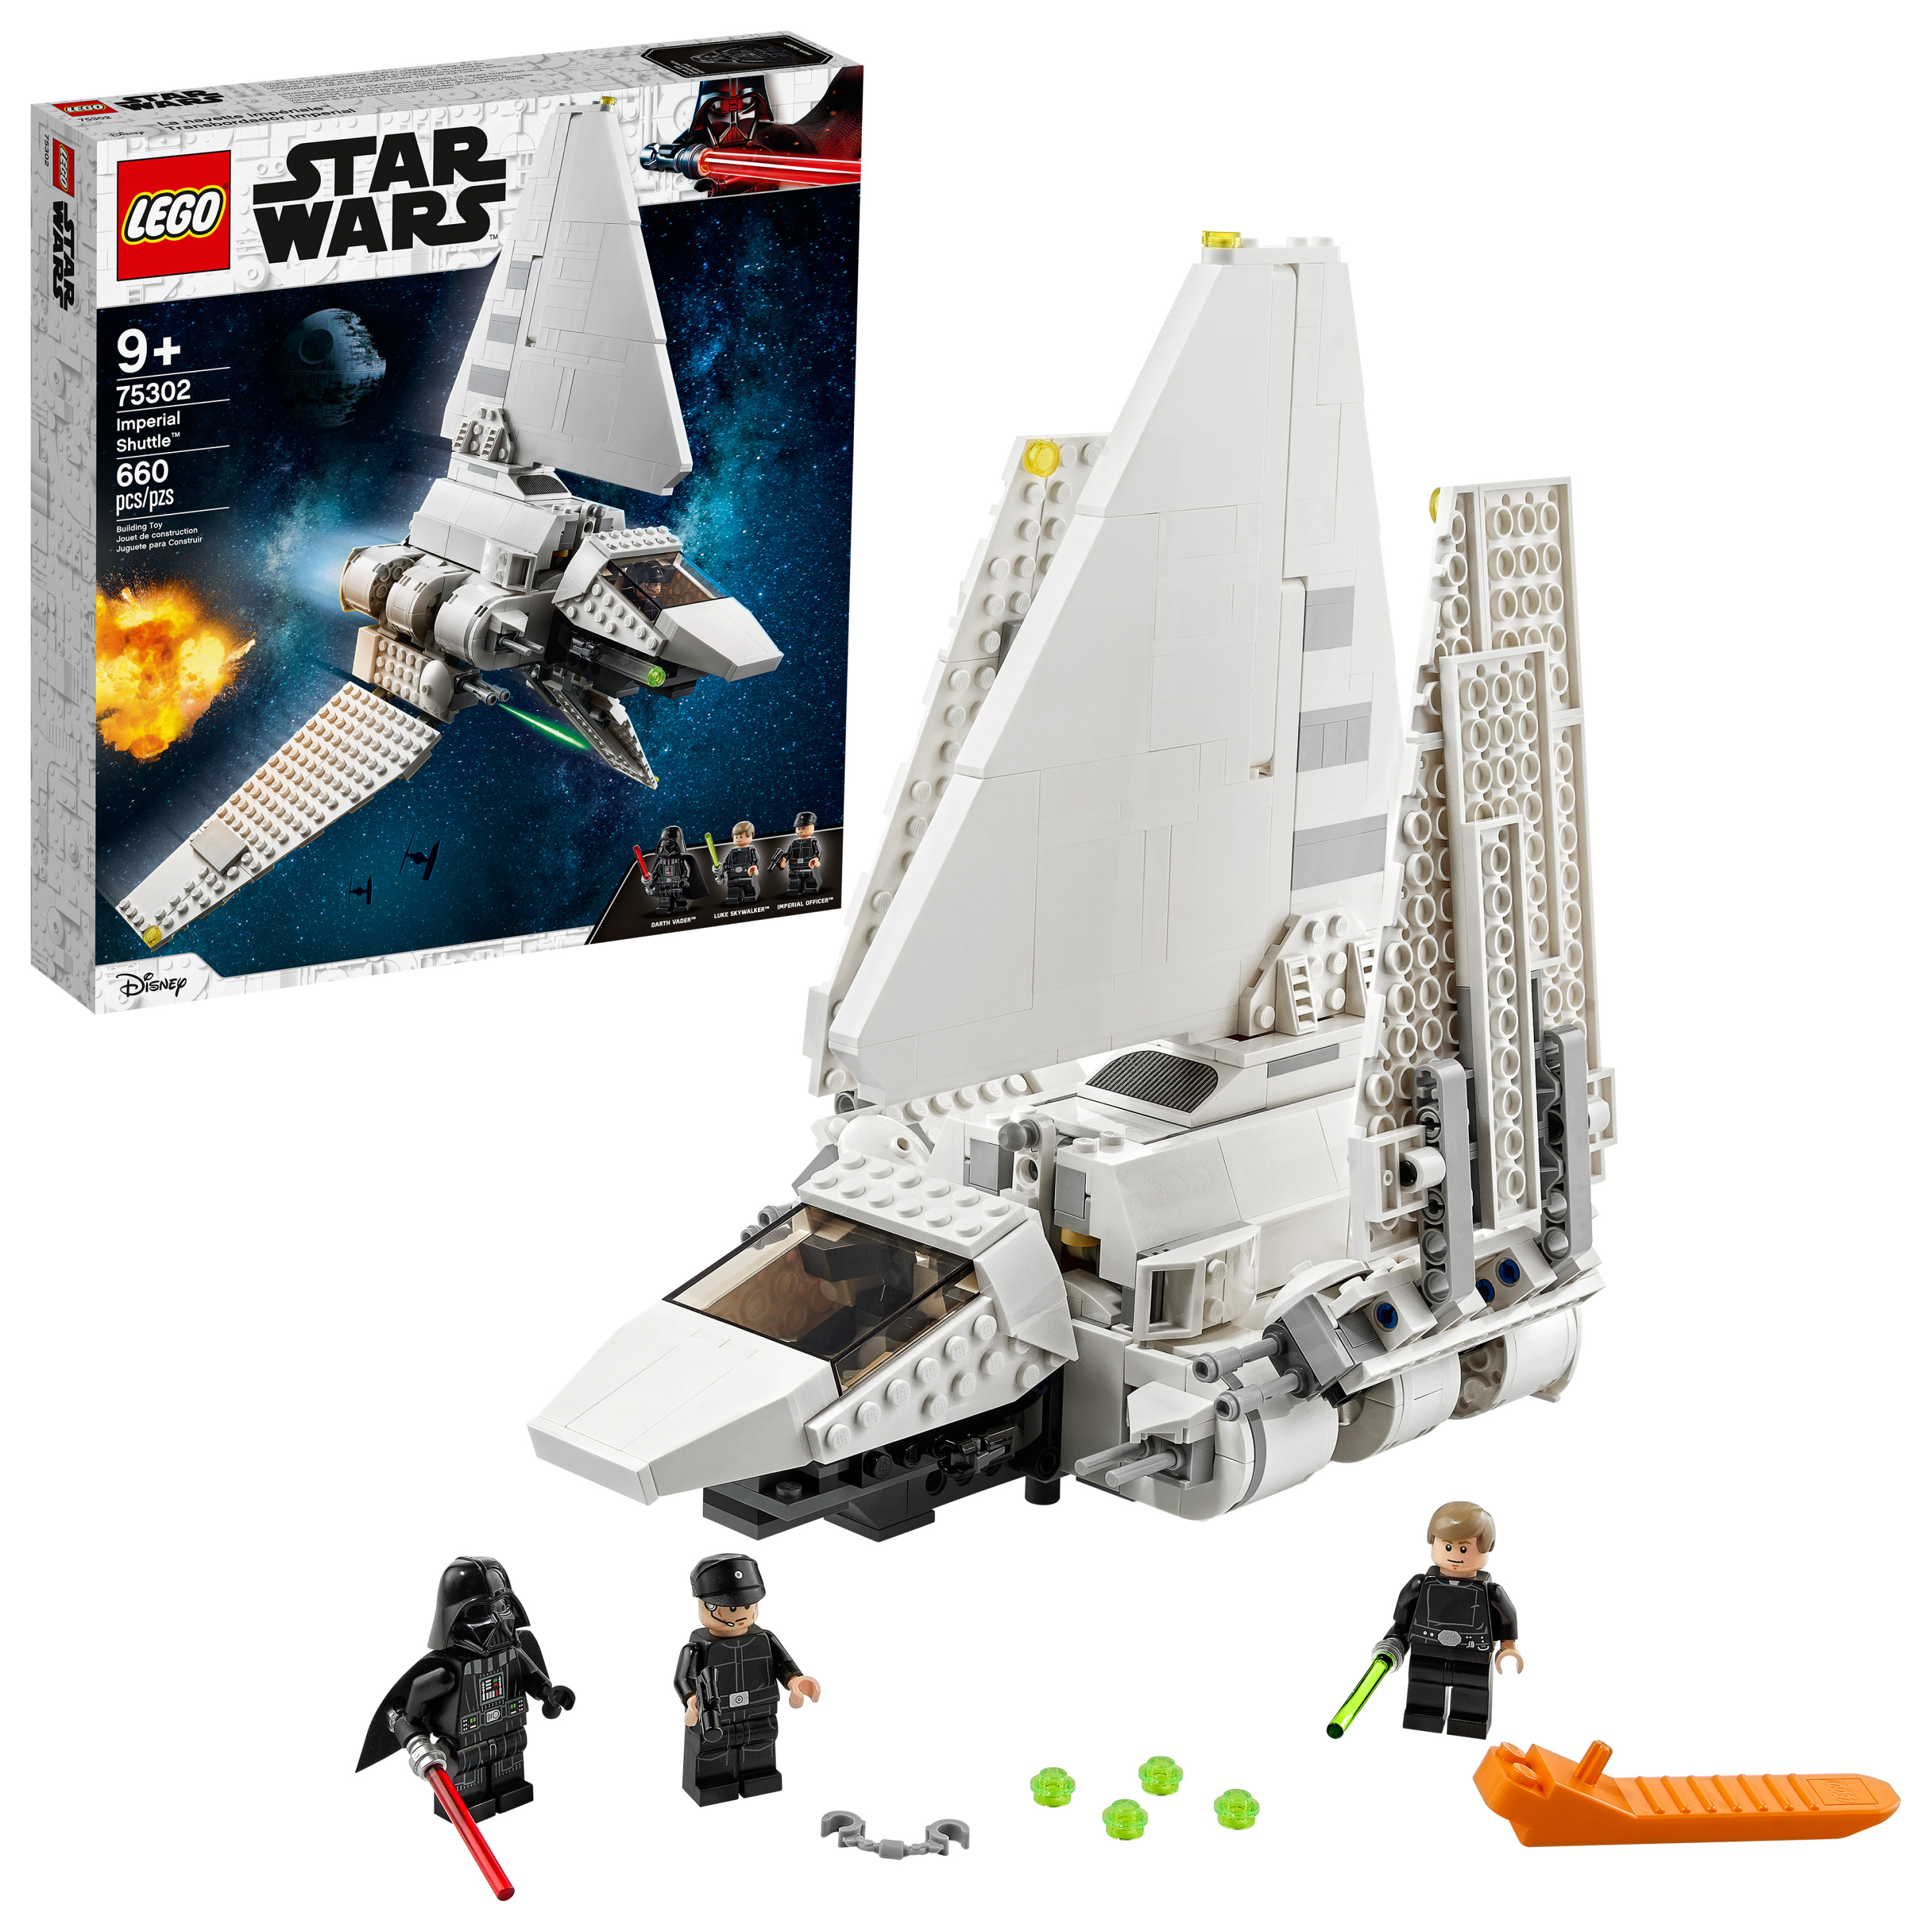 LEGO Star Wars Imperial Shuttle 75302 Building Toy (660 Pieces) - Walmart.com $56